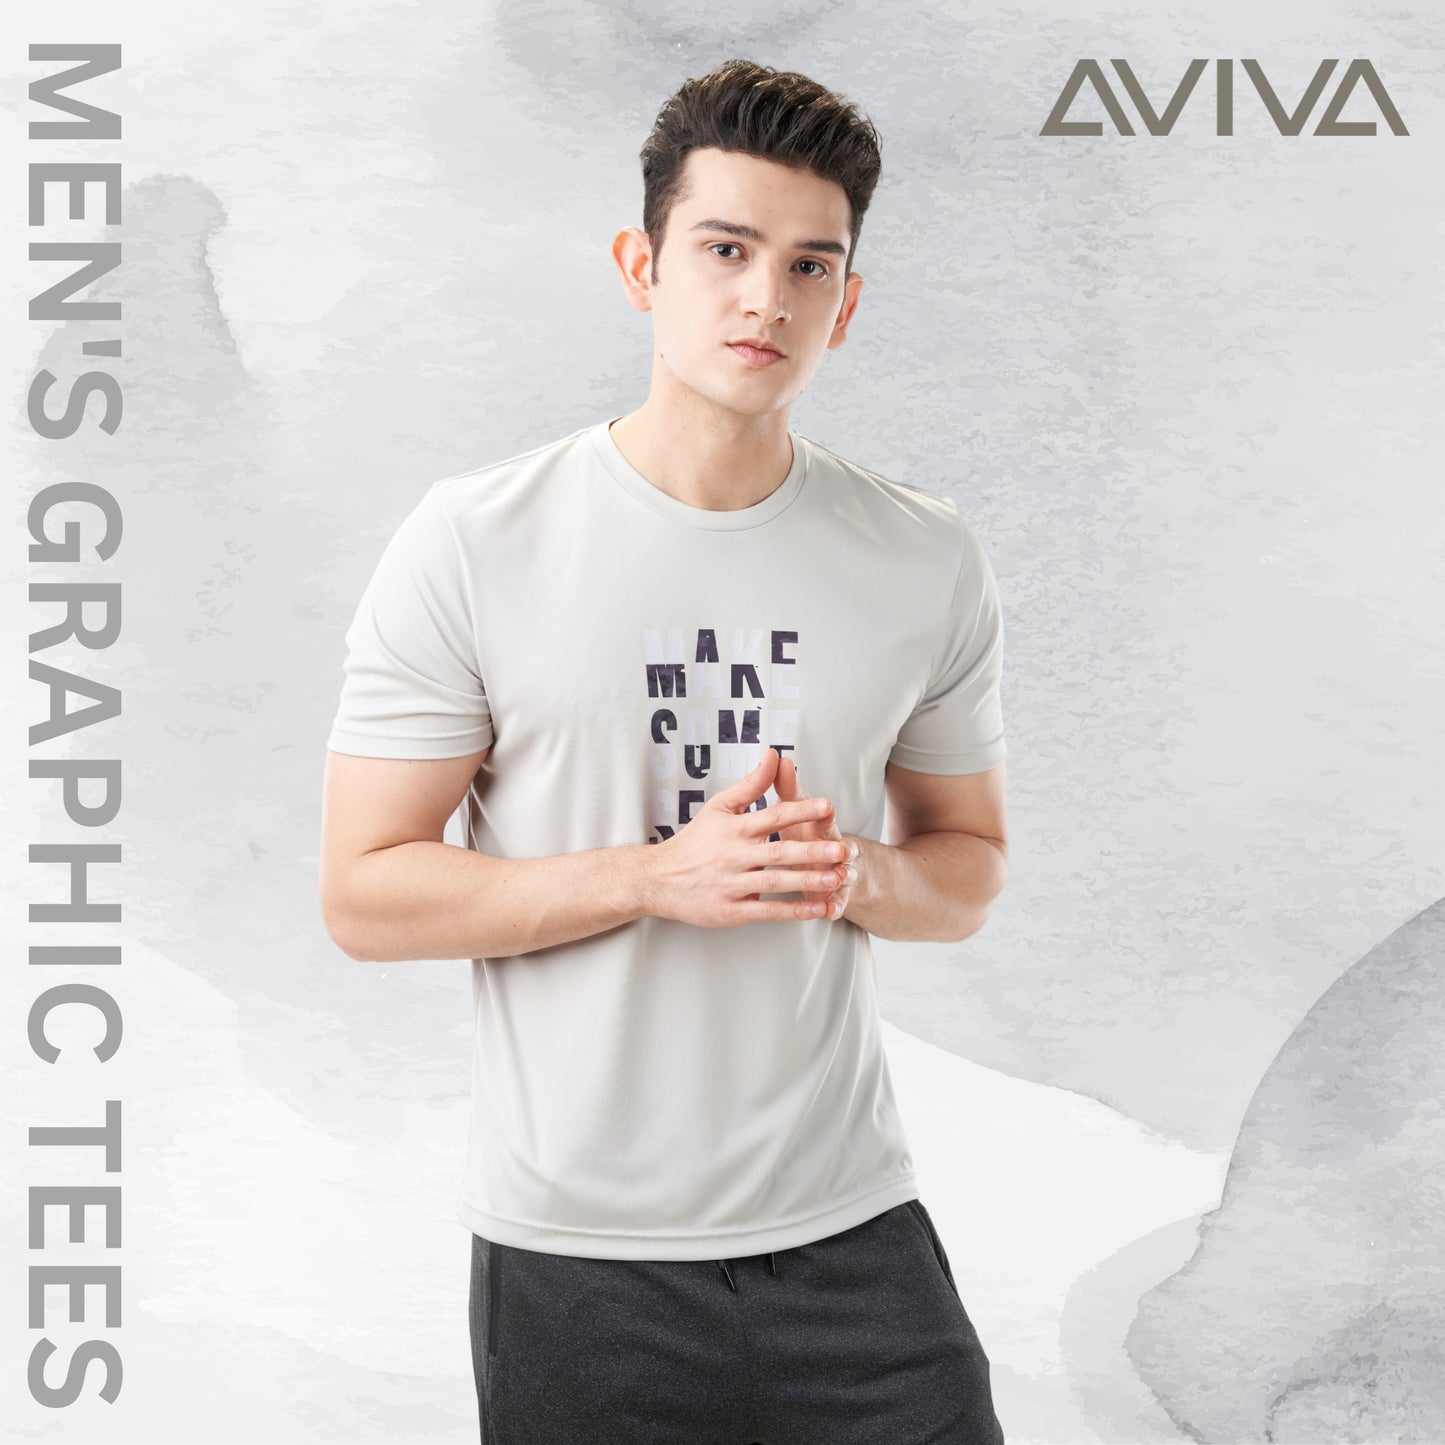 AVIVA Men's Graphic Short Sleeve Tee (91-8049)